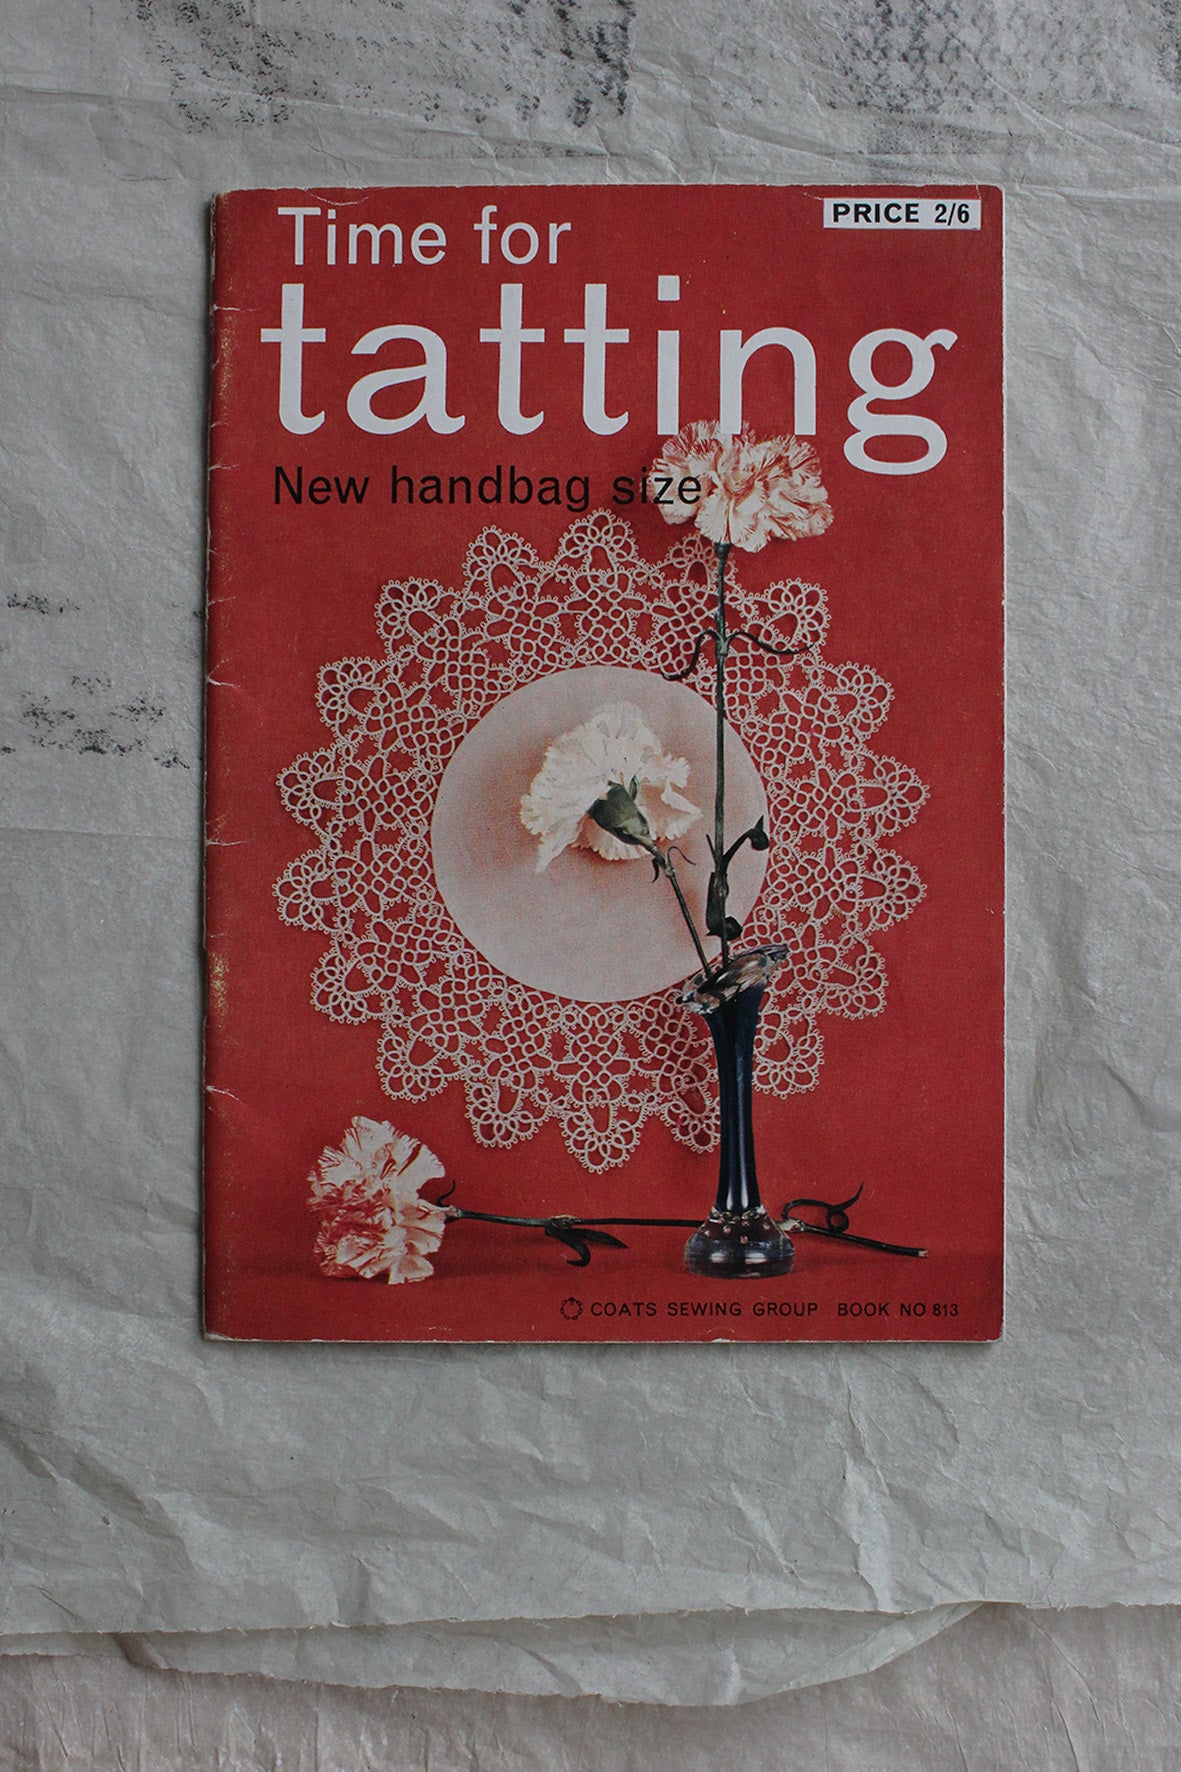 Vintage Handbook - Time for Tatting